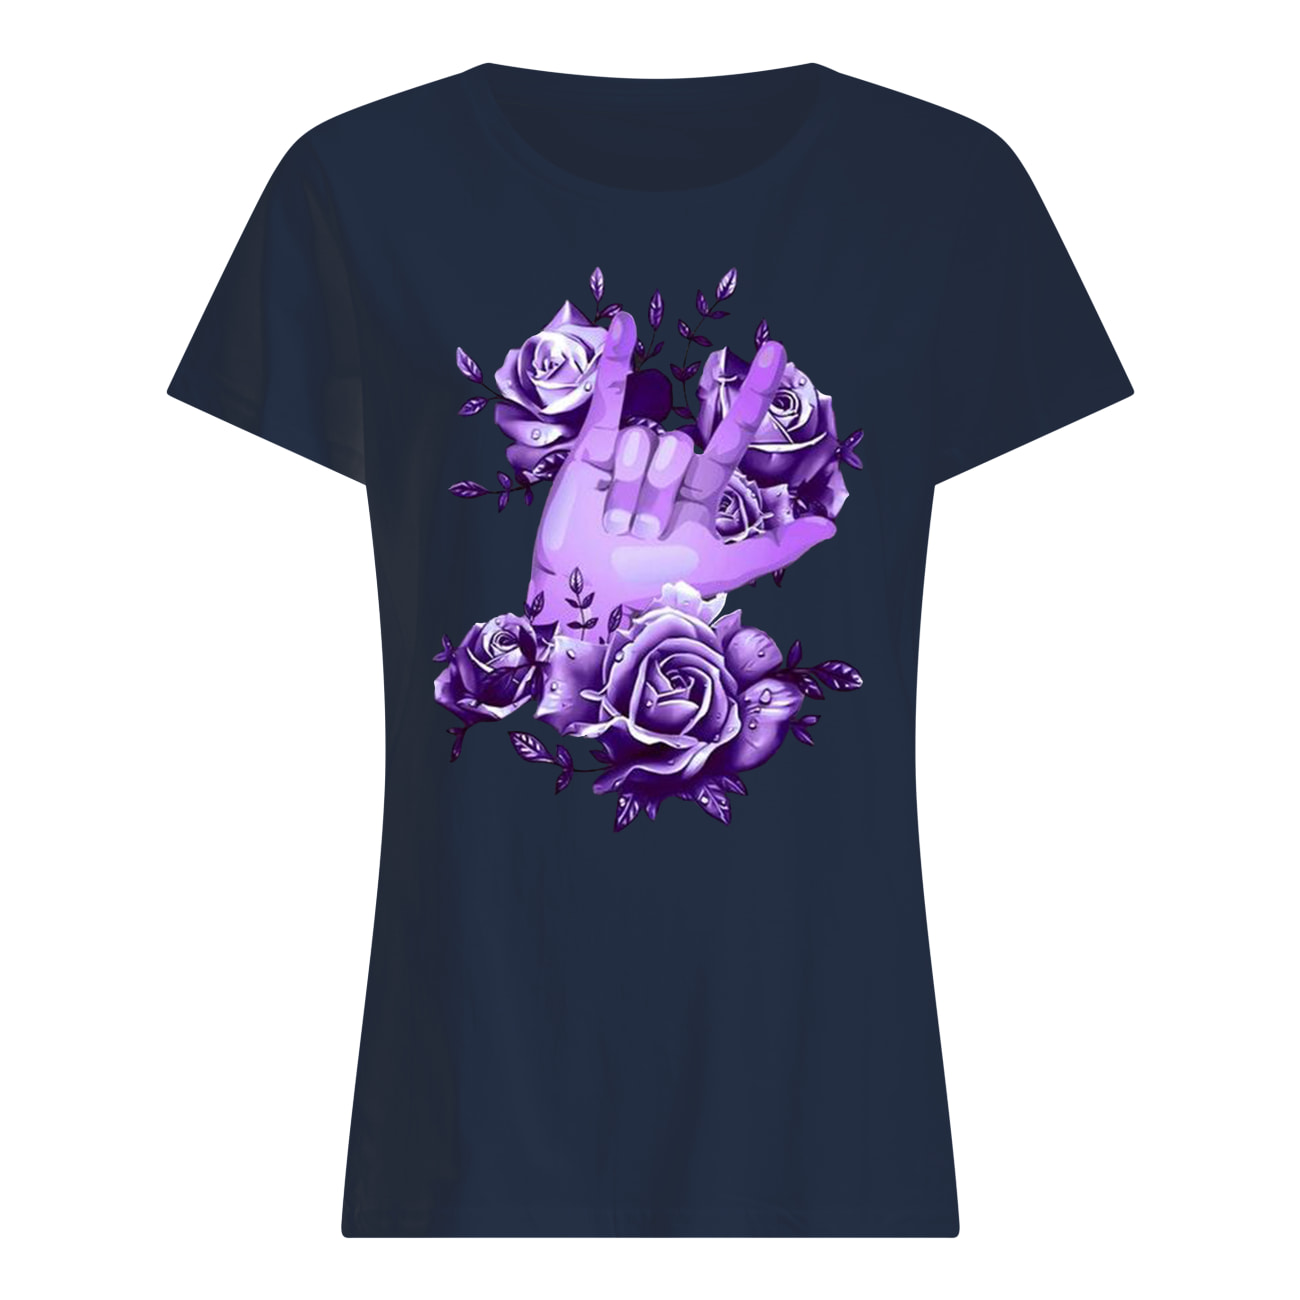 Sign language rose purple womens shirt